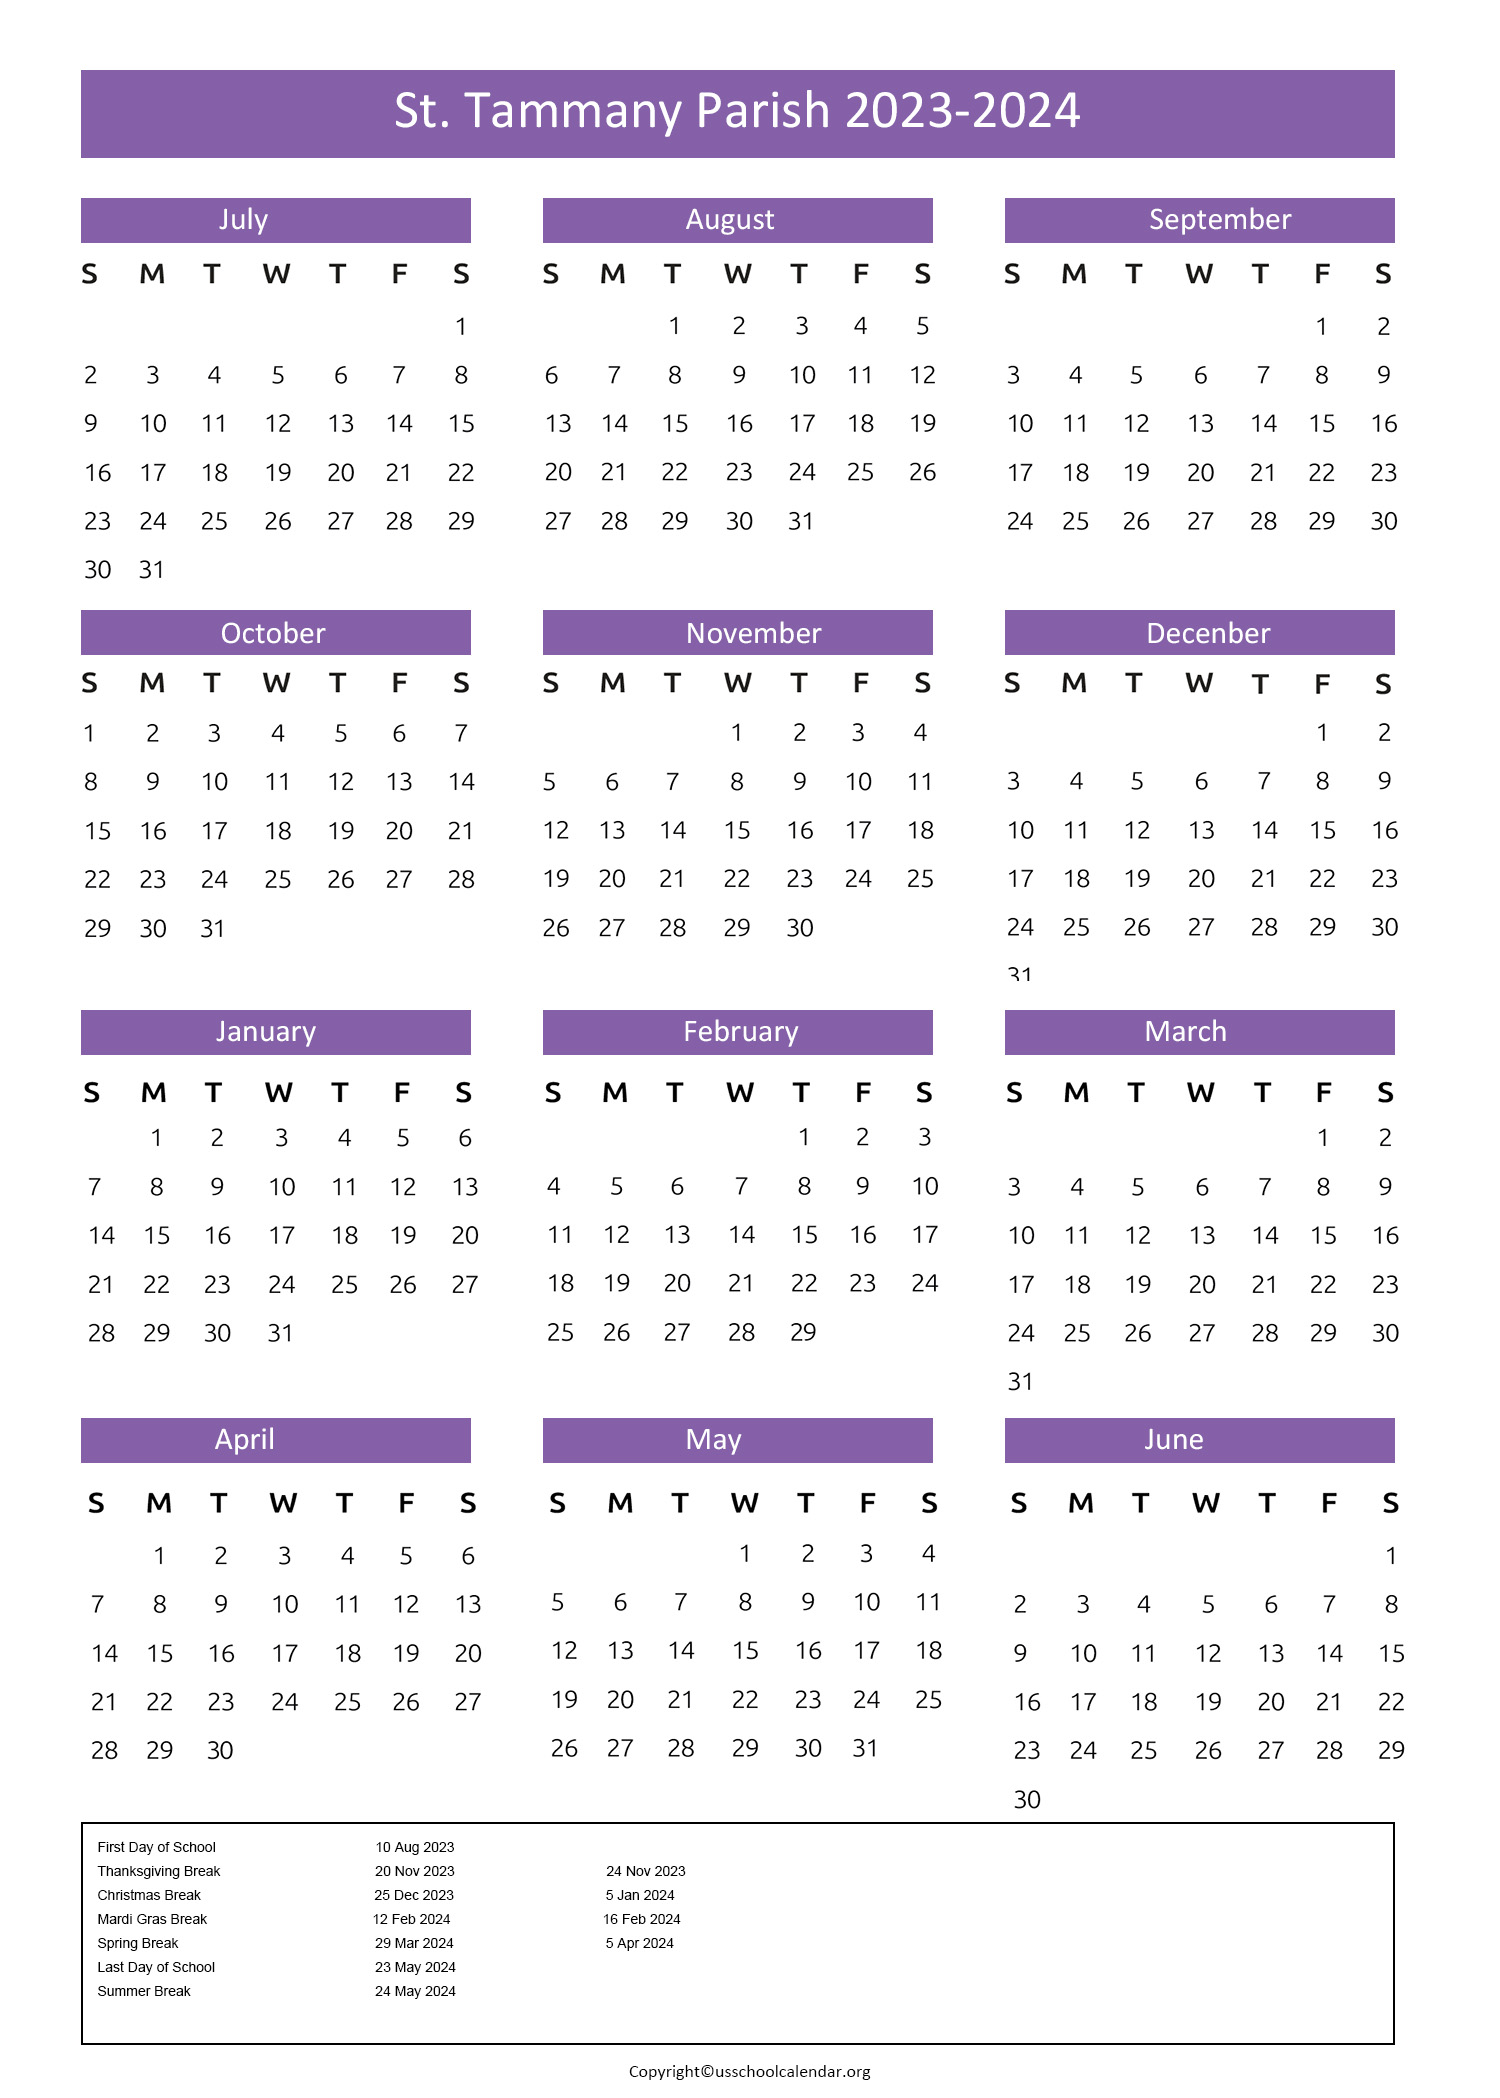 St Tammany Parish Schools Calendar with Holidays 2023-2024